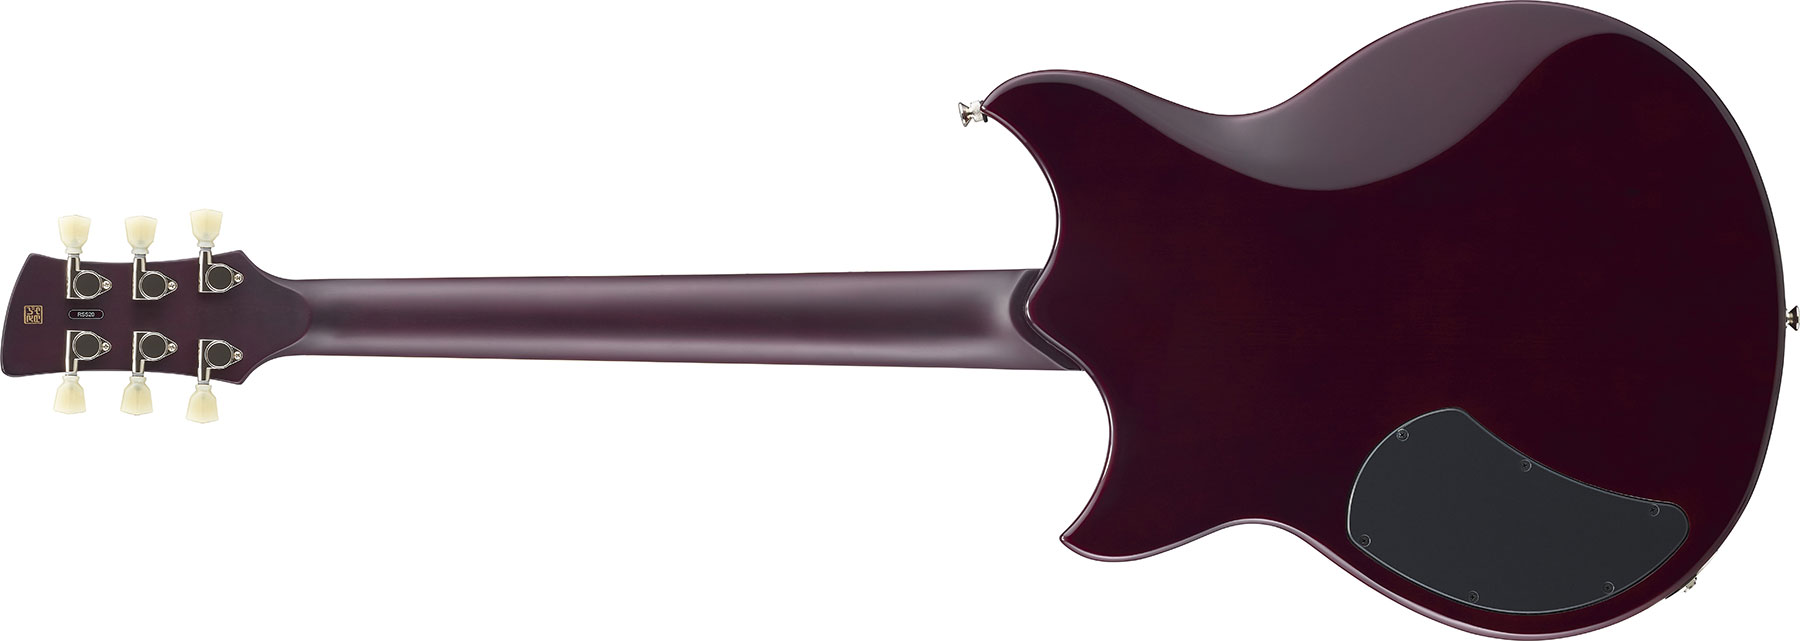 Yamaha Rss20 Revstar Standard Hh Ht Rw - Flash Green - Guitarra eléctrica de doble corte. - Variation 2